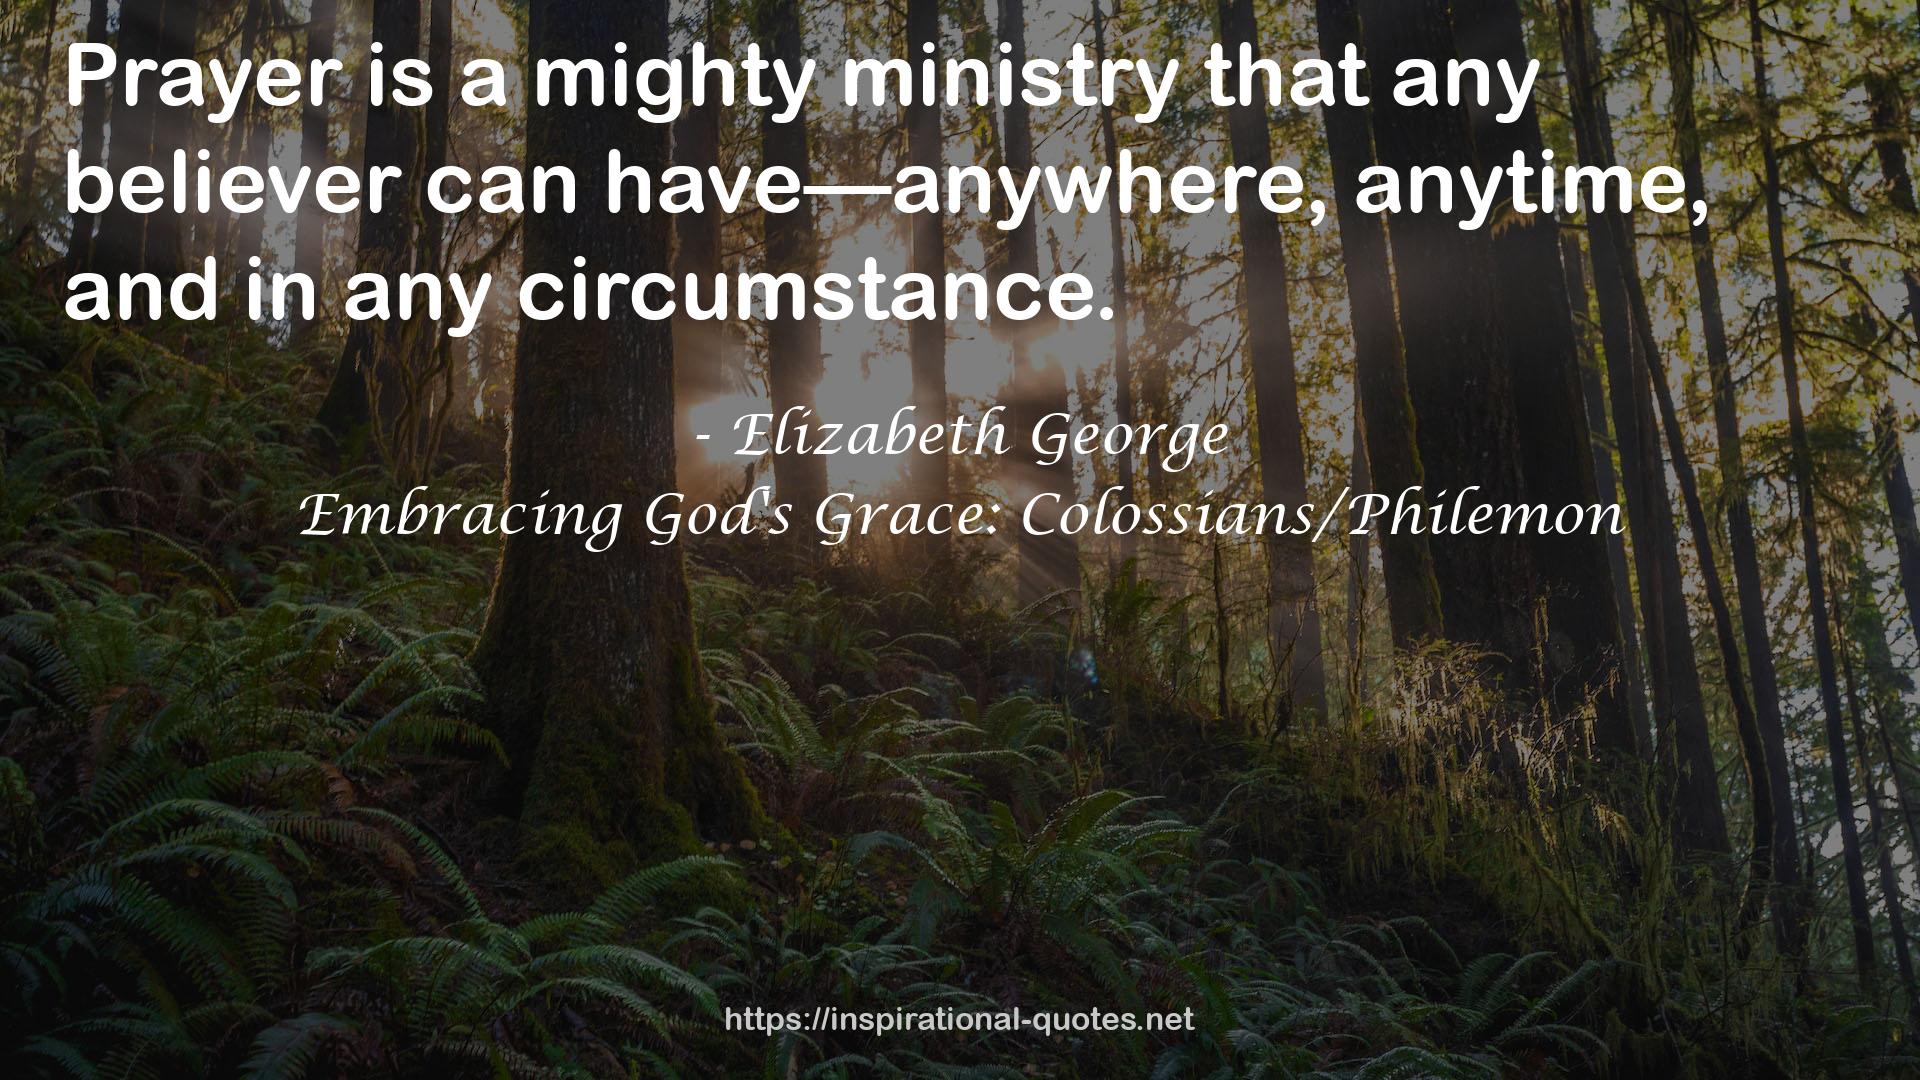 Embracing God's Grace: Colossians/Philemon QUOTES